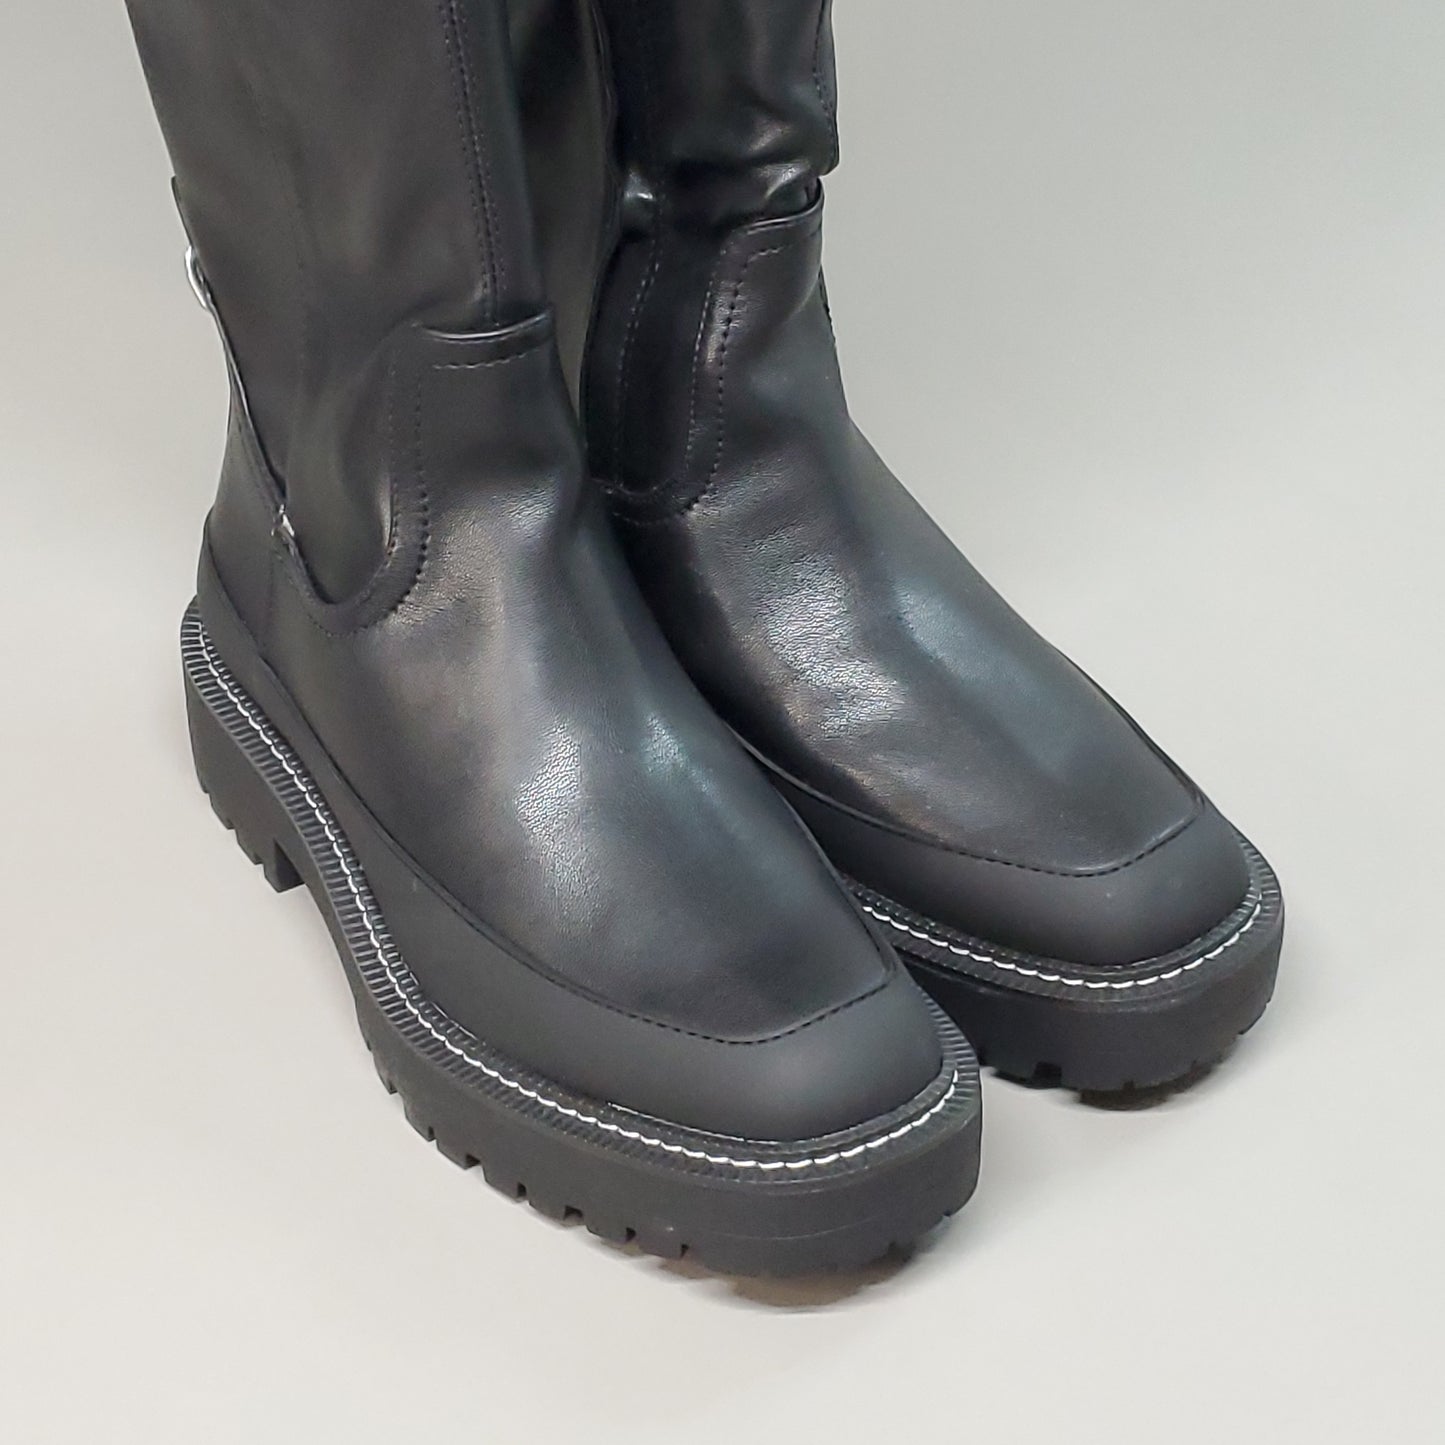 SAM EDELMAN Lerue Nappa Tall Leather Riding Boots Women's Sz 7.5 M Black H8522L1001 (New)